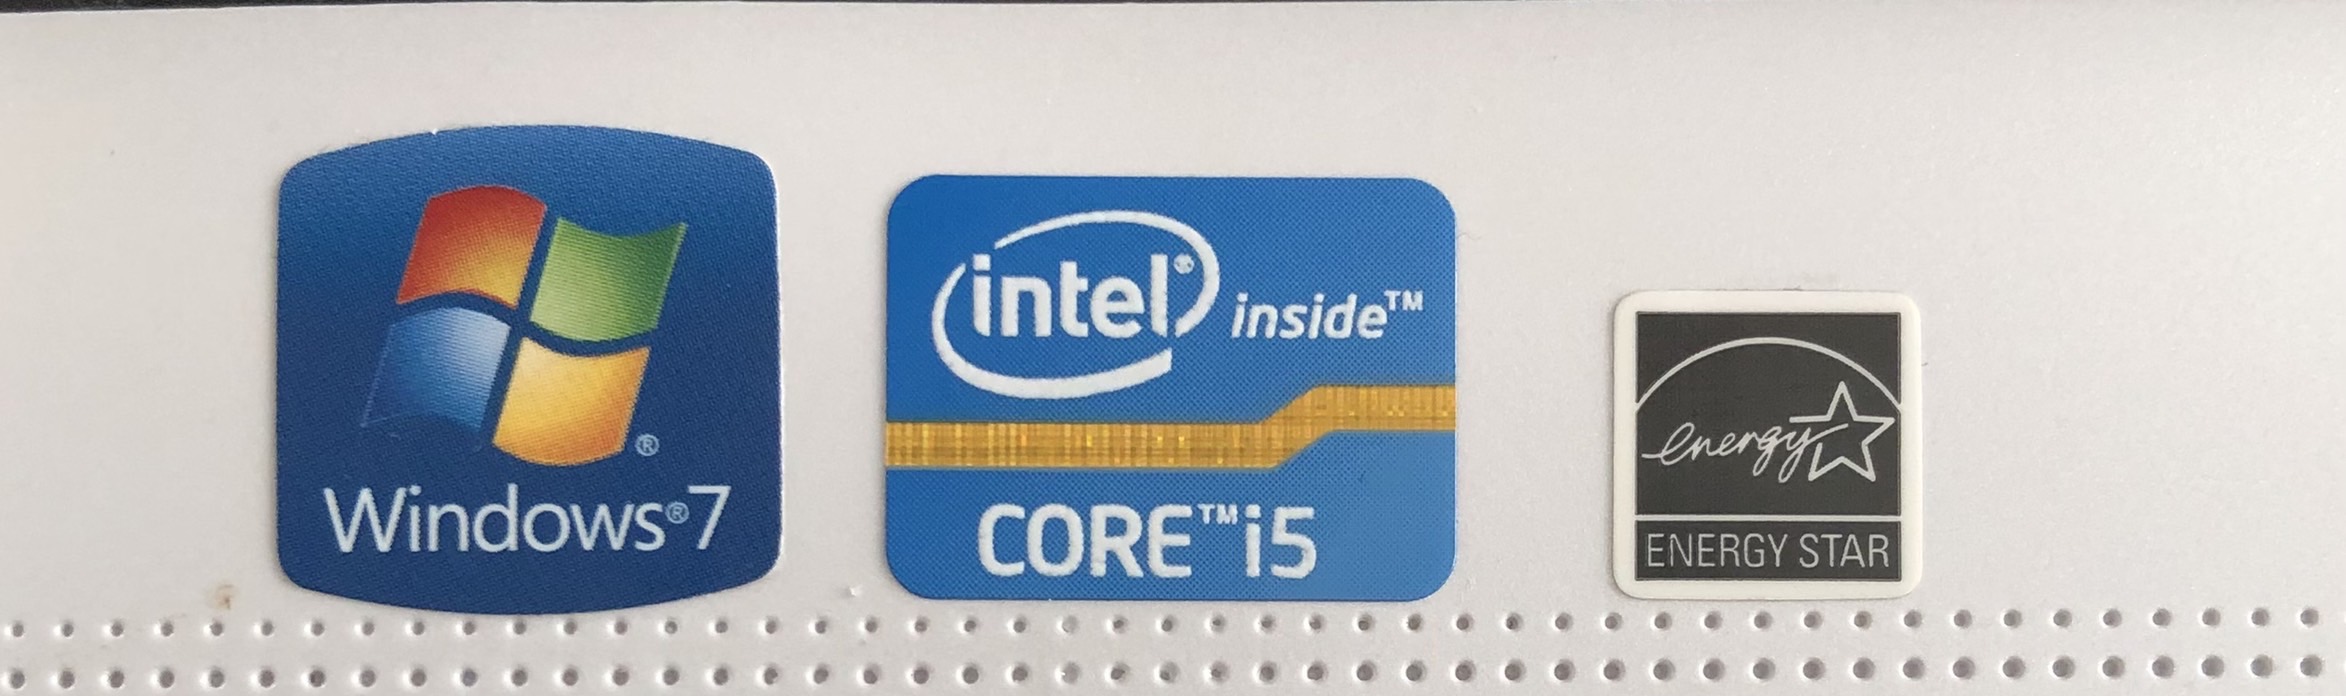 intel inside i5